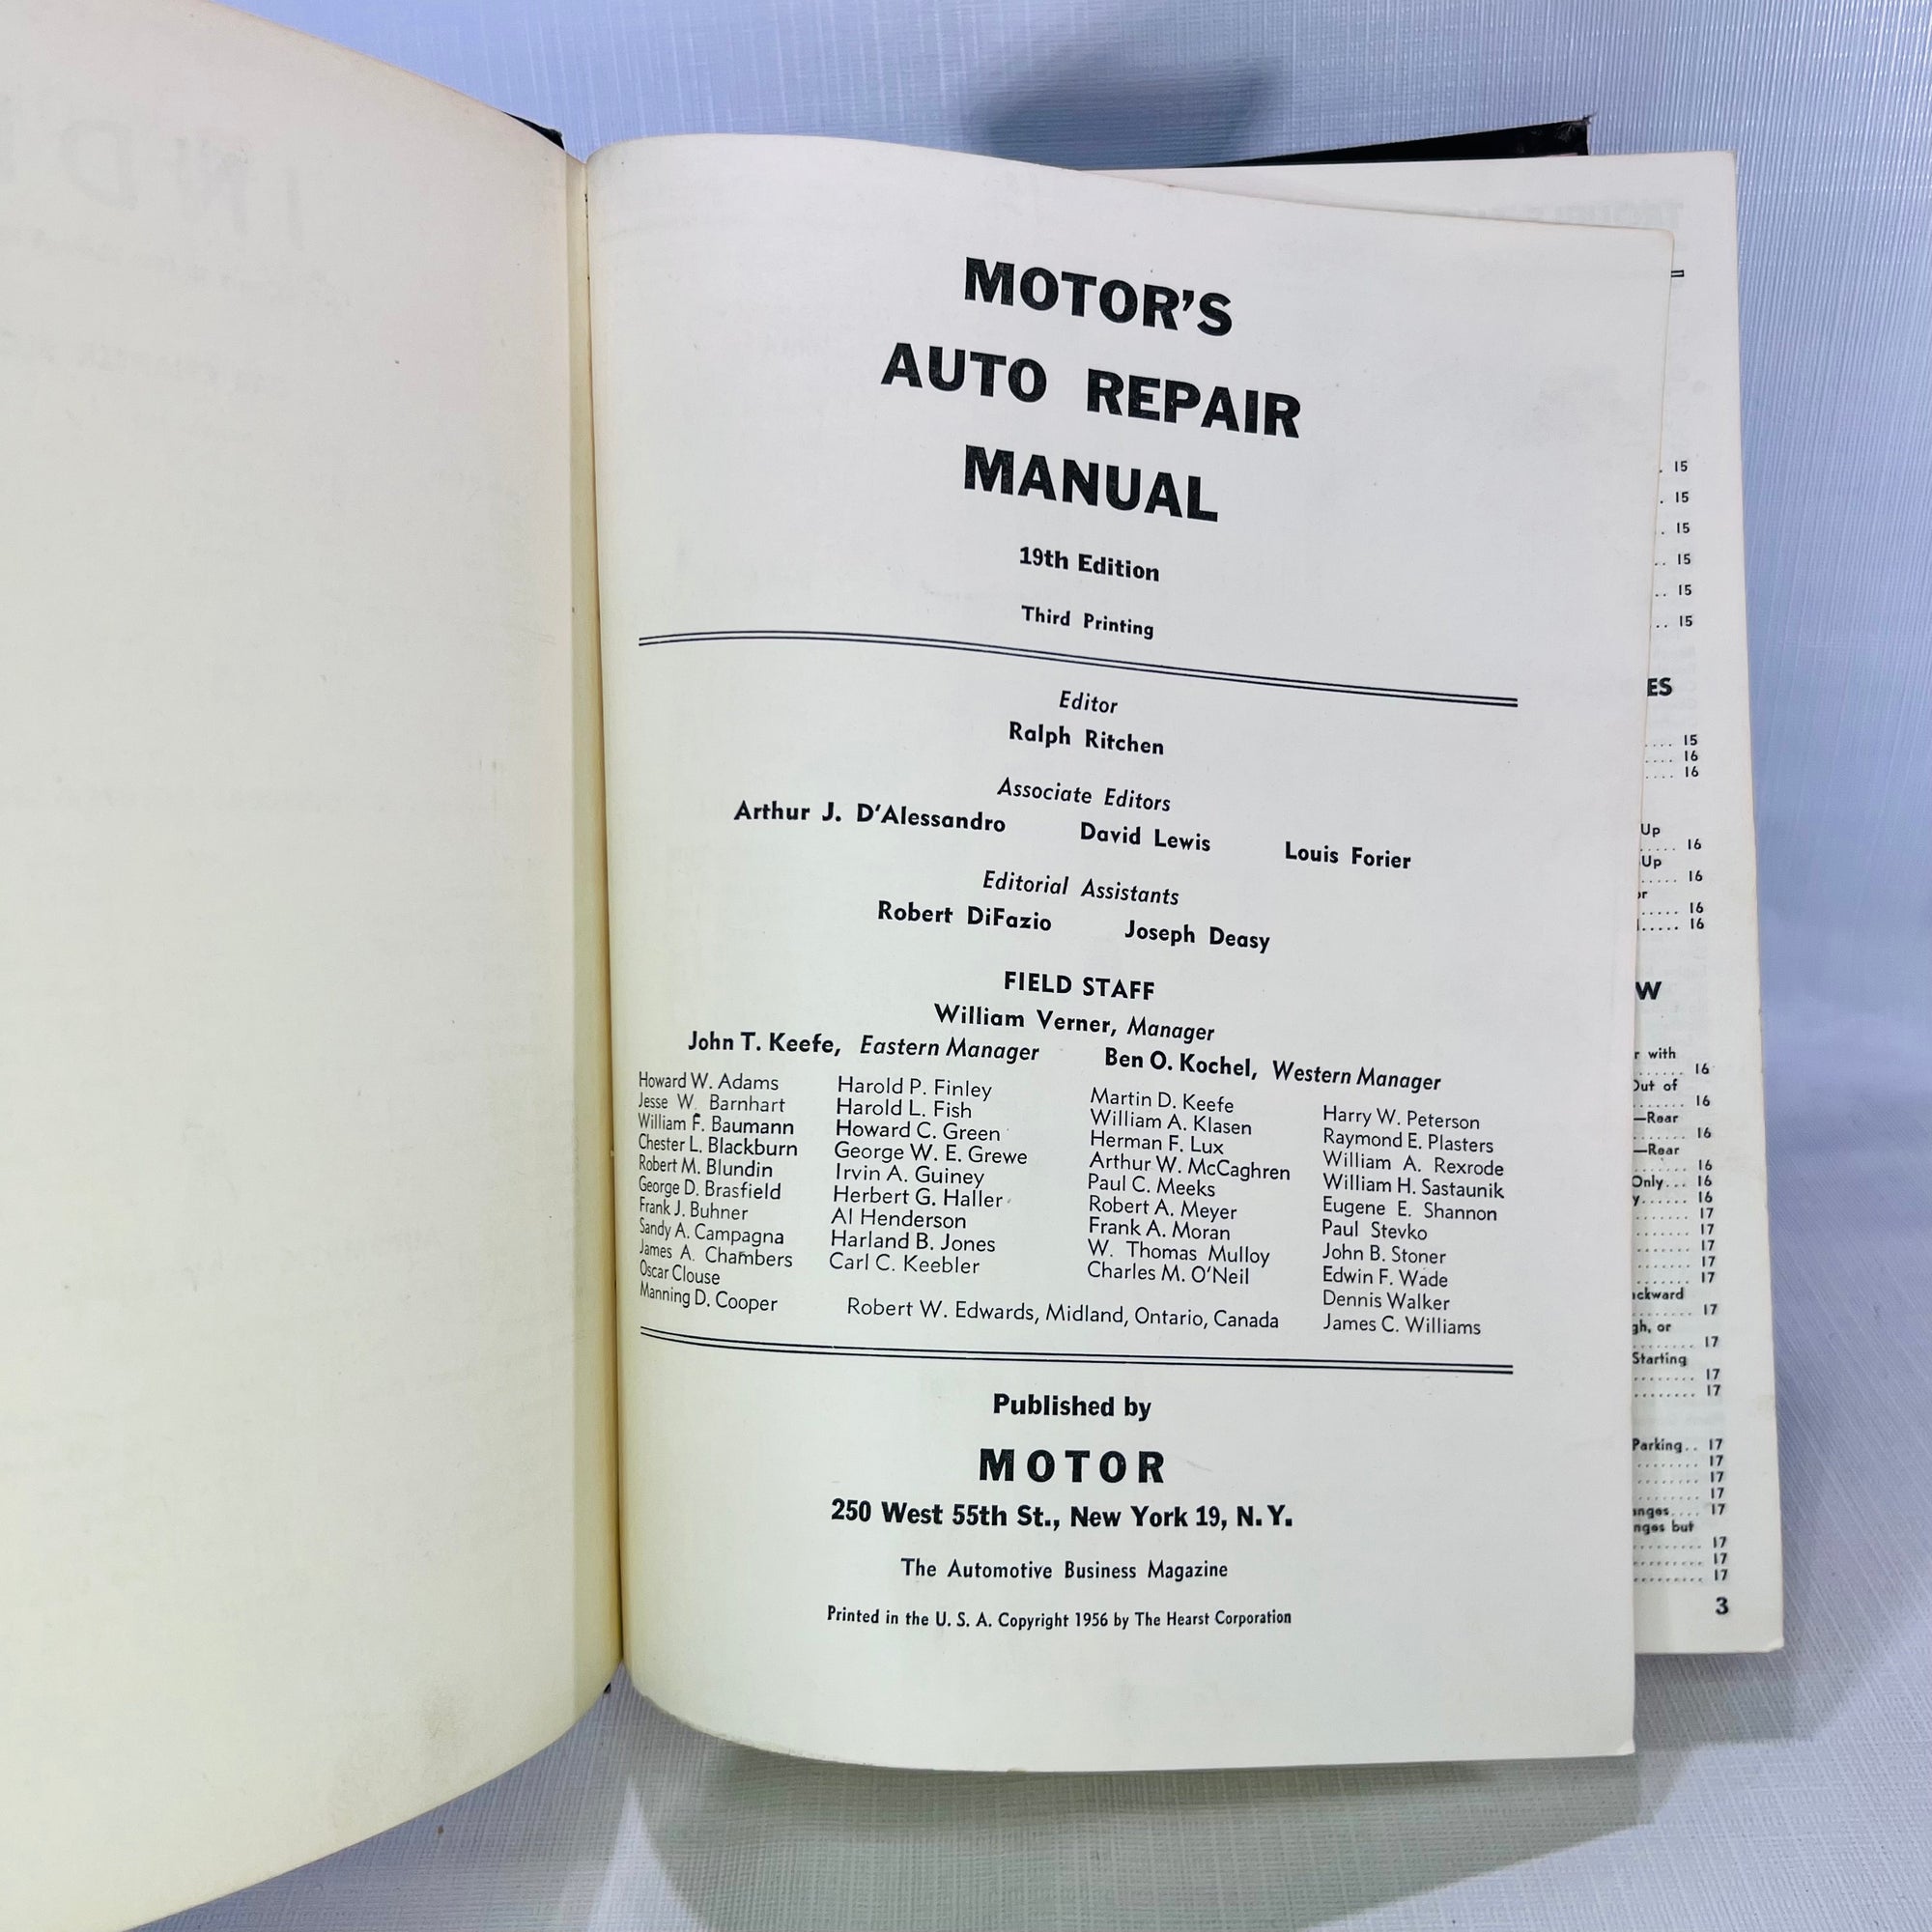 Motor's Auto Repair Manual Editor Ralph Ritchen Nineteenth Edition Third Printing